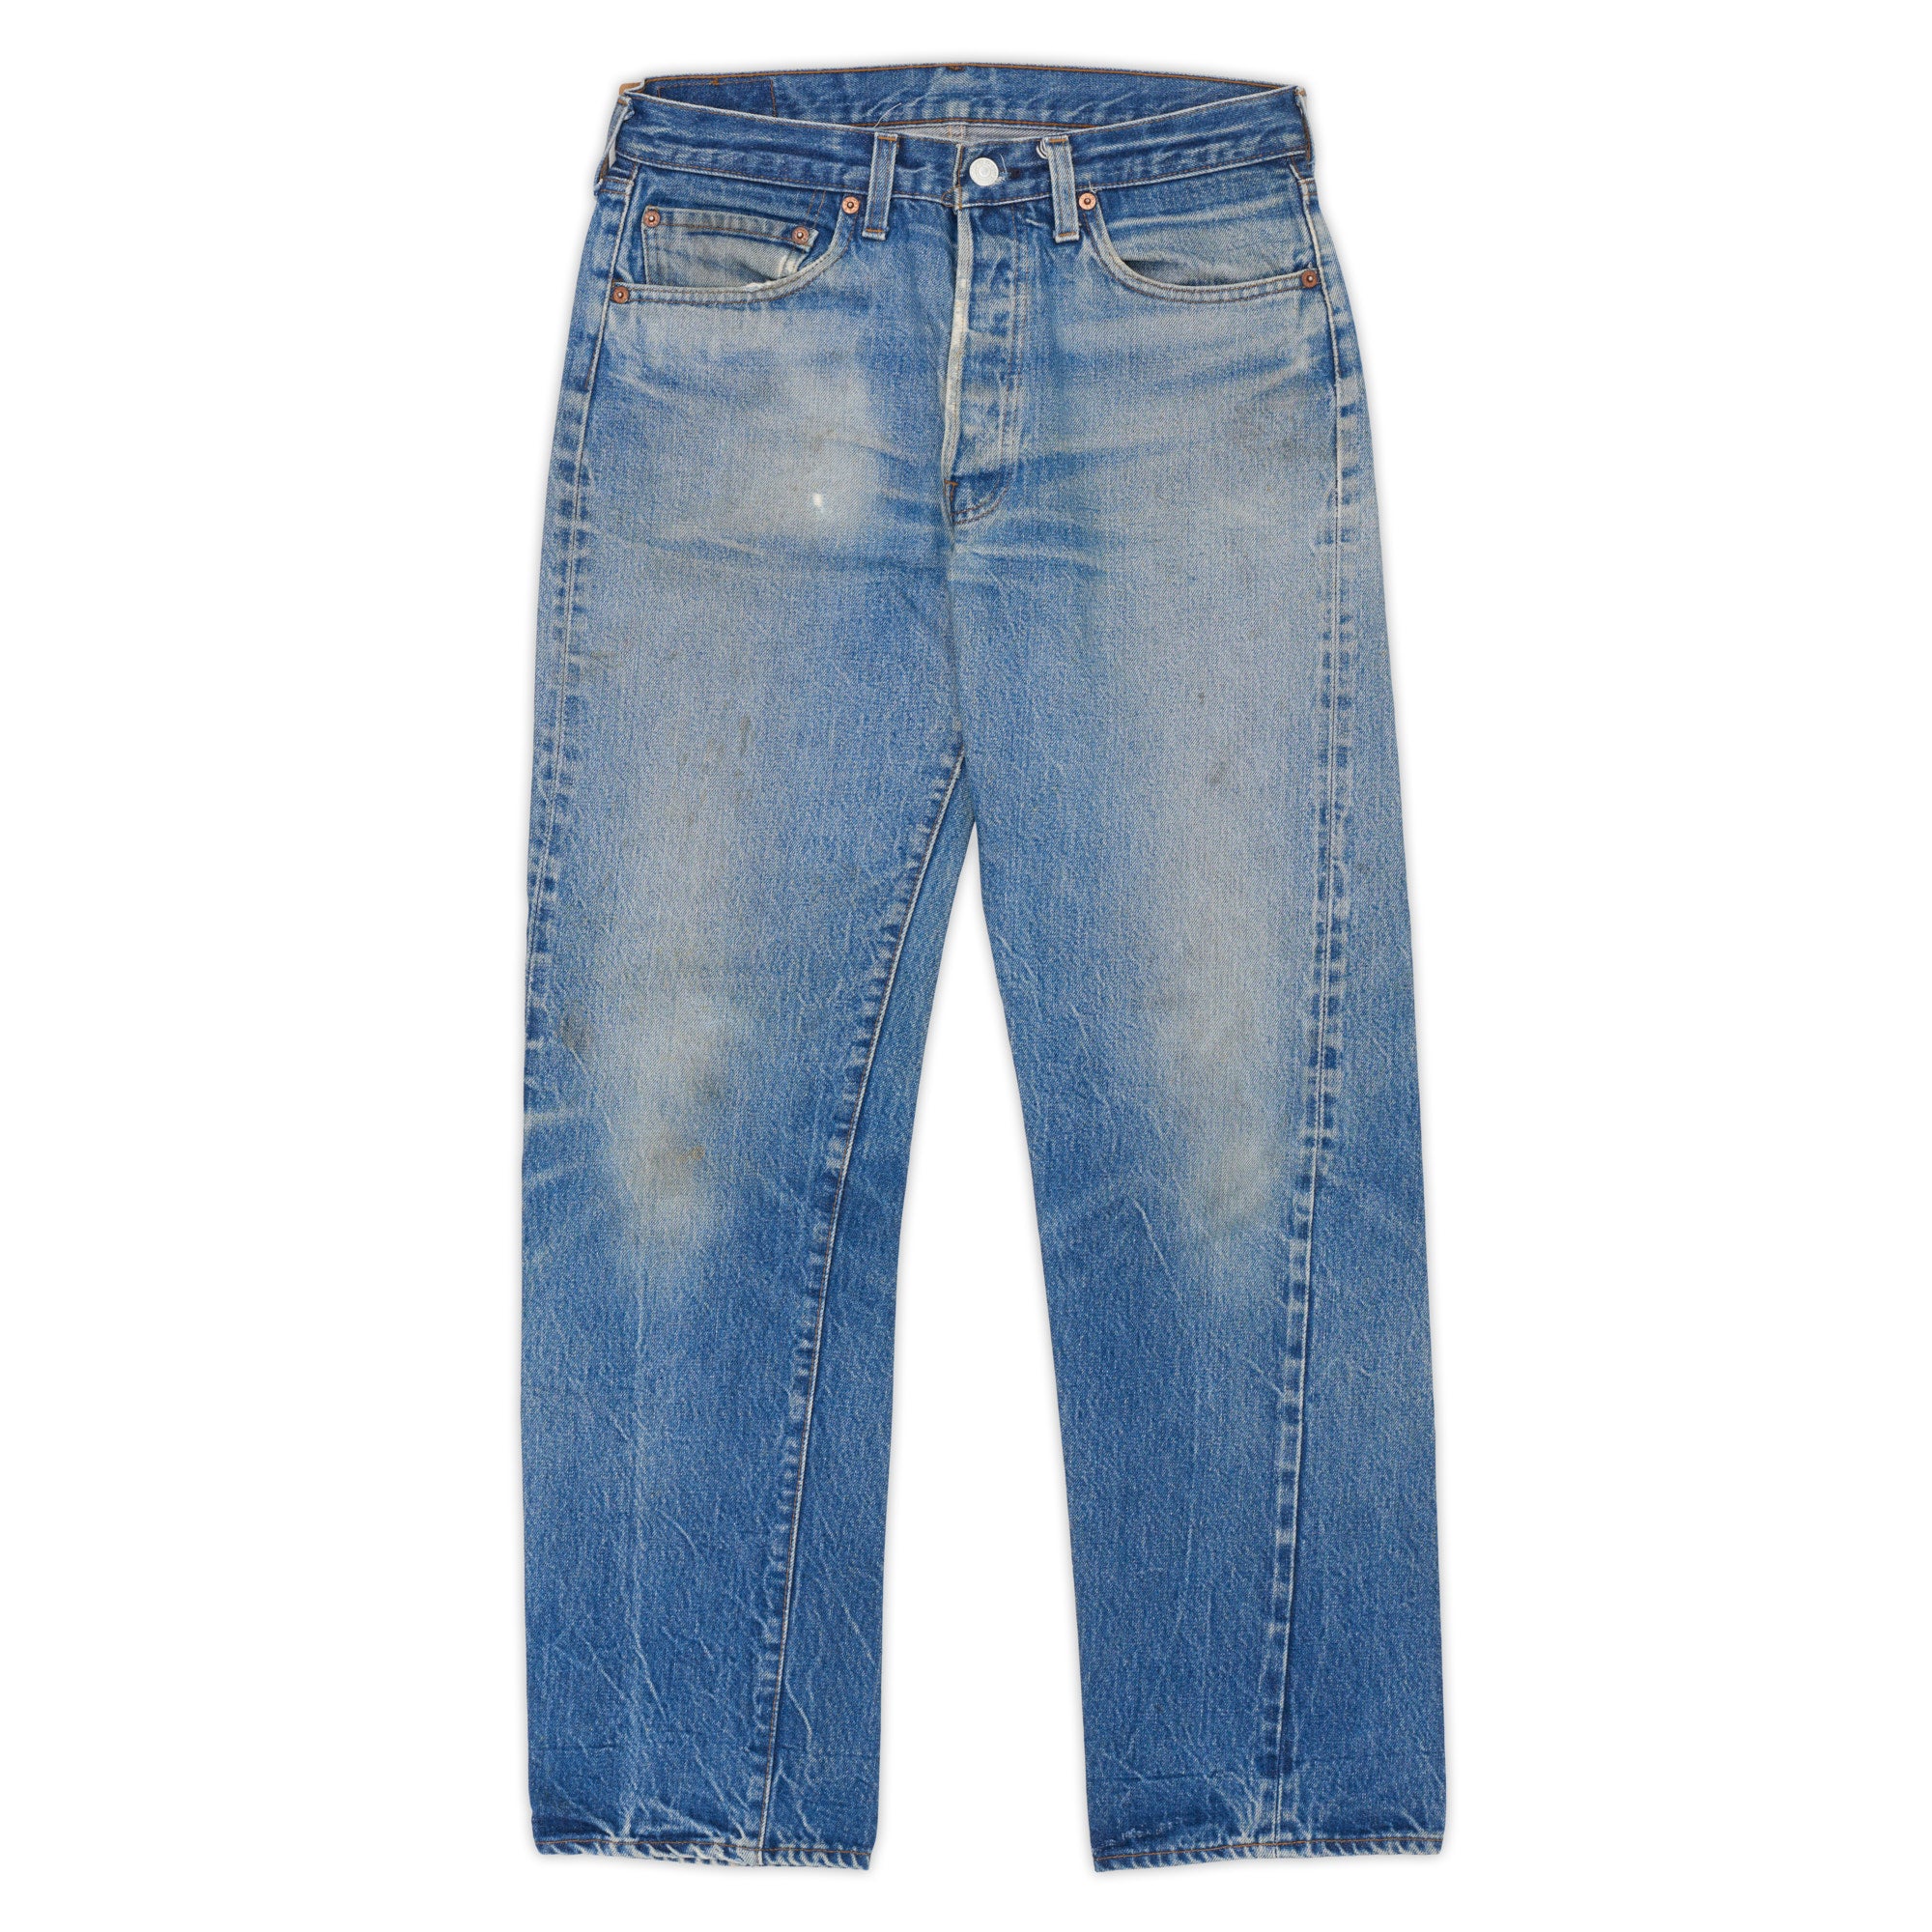 Vintage LEVI'S 501 USA Selvedge Slim Jeans Pants W33 L34 #524 Blue